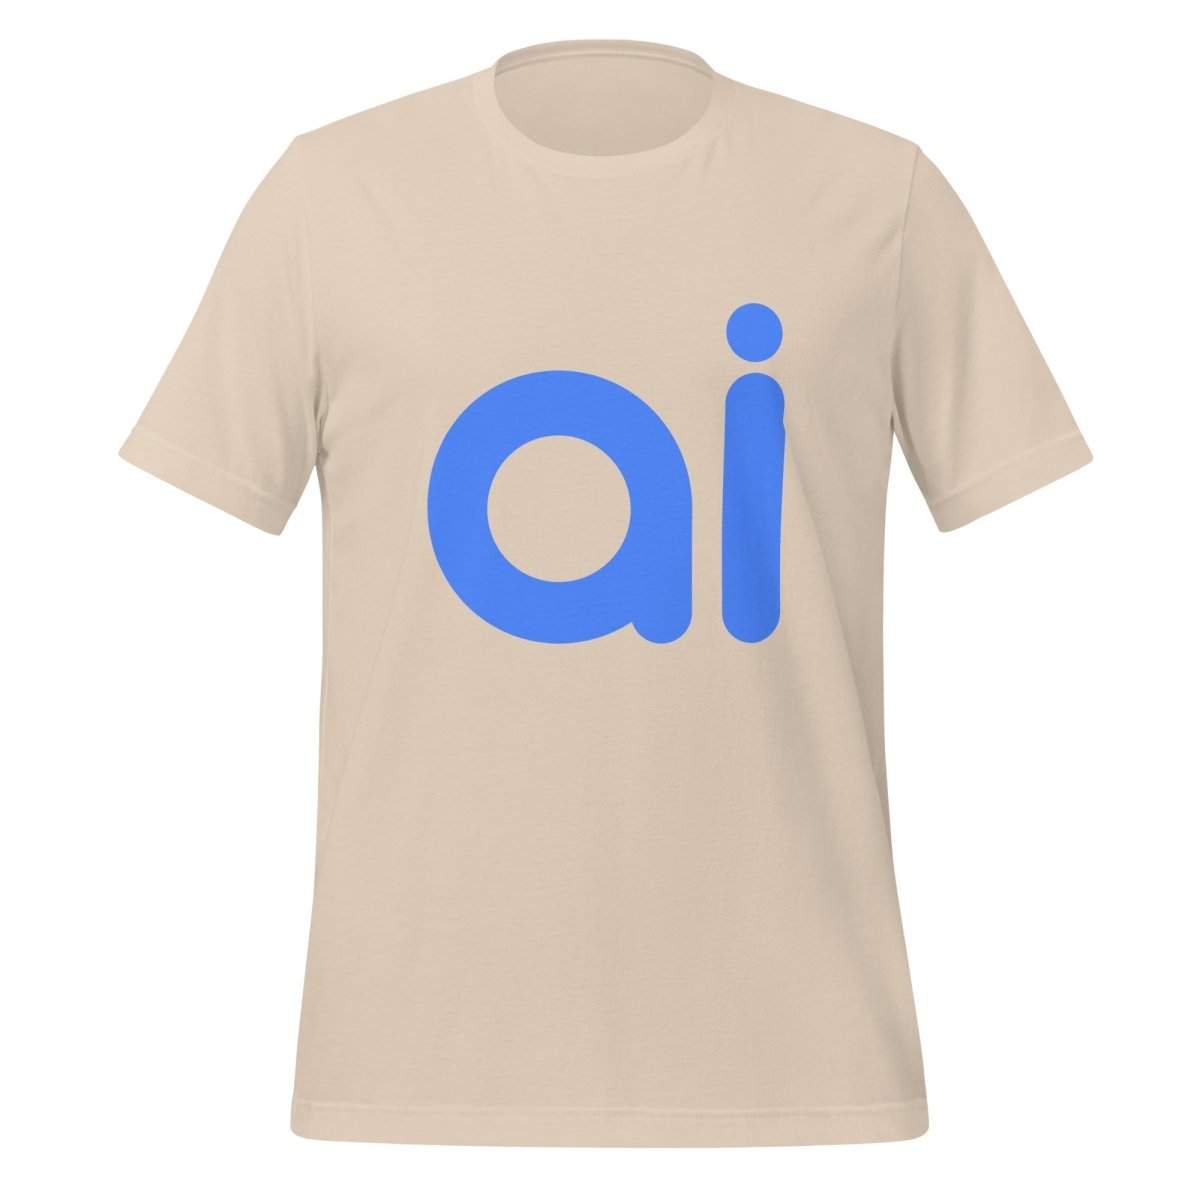 ai T - Shirt (unisex) - Soft Cream - AI Store